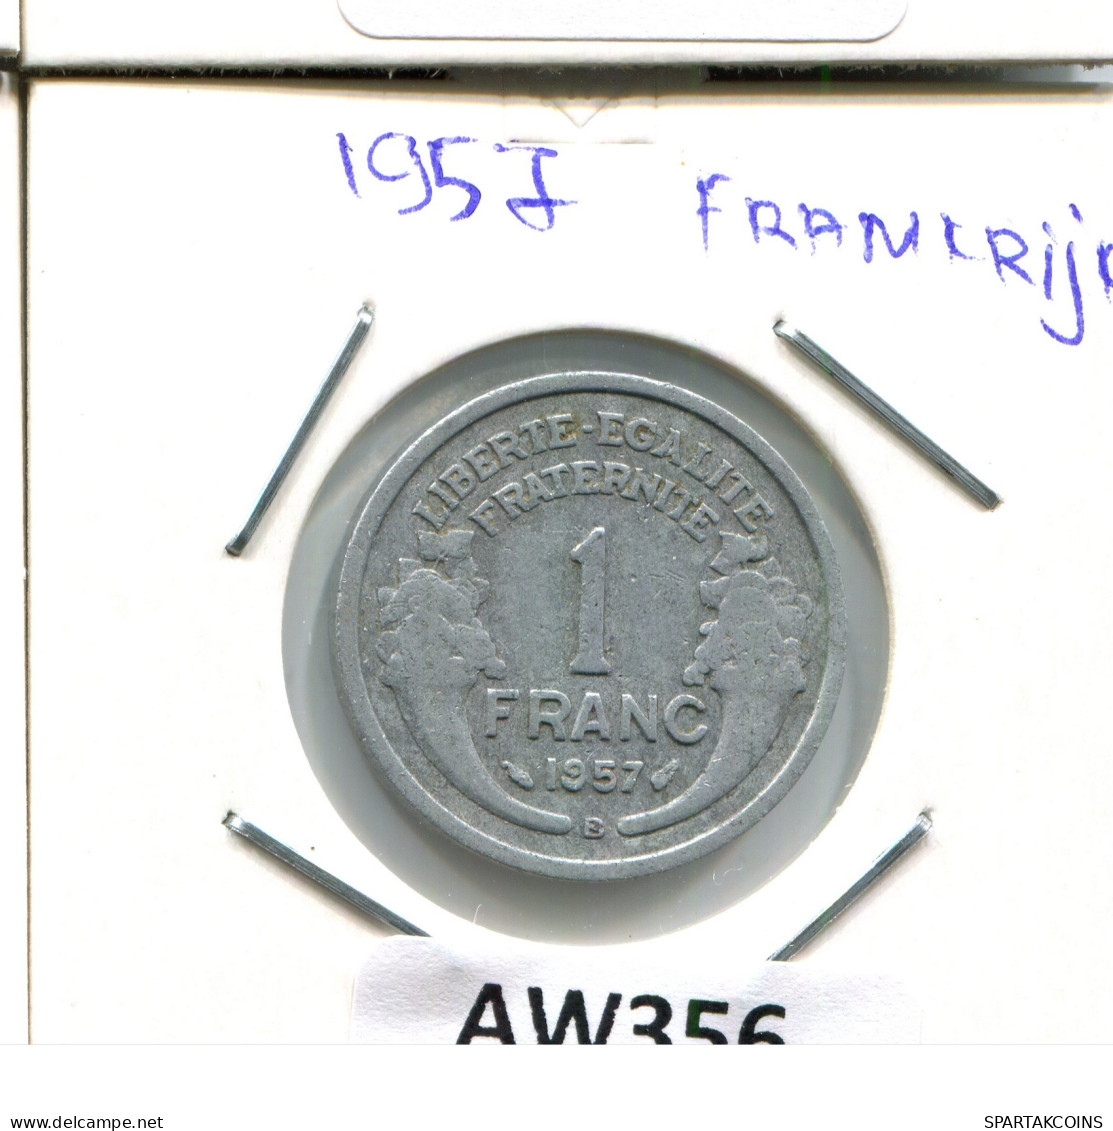 1 FRANC 1957 FRANKREICH FRANCE Französisch Münze #AW356.D - 1 Franc